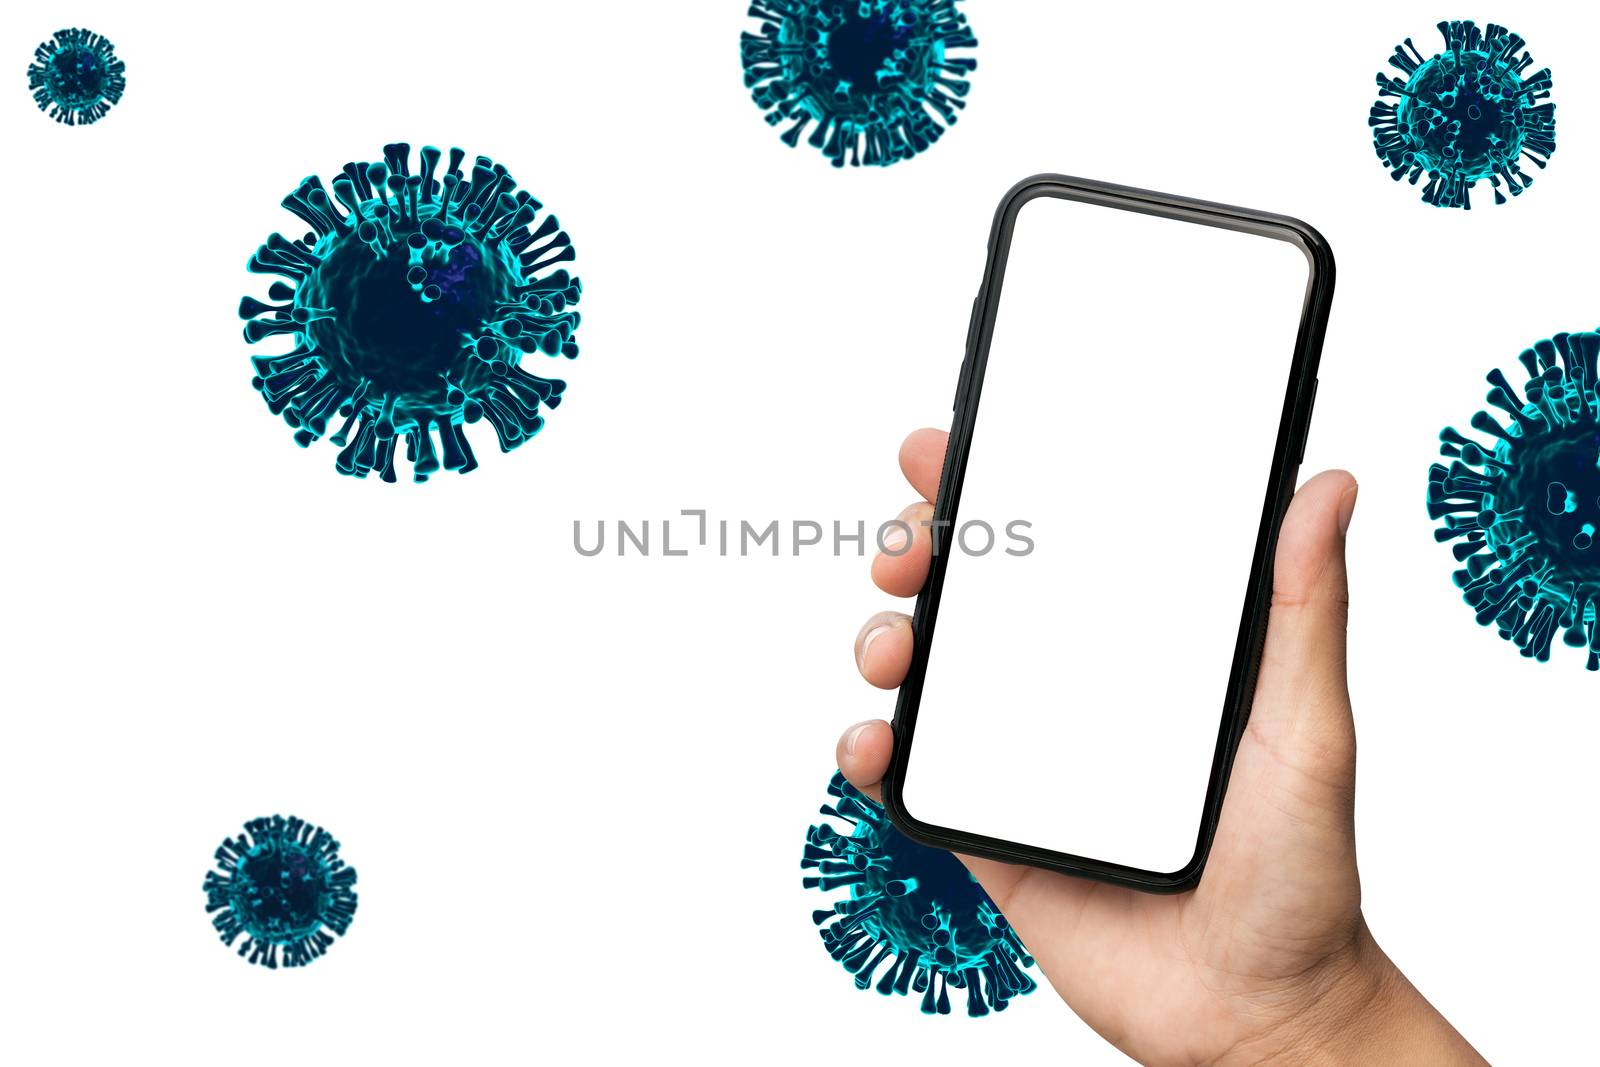 Hand holding smartphone and Covid-19, coronavirus, 3D virus render on background.